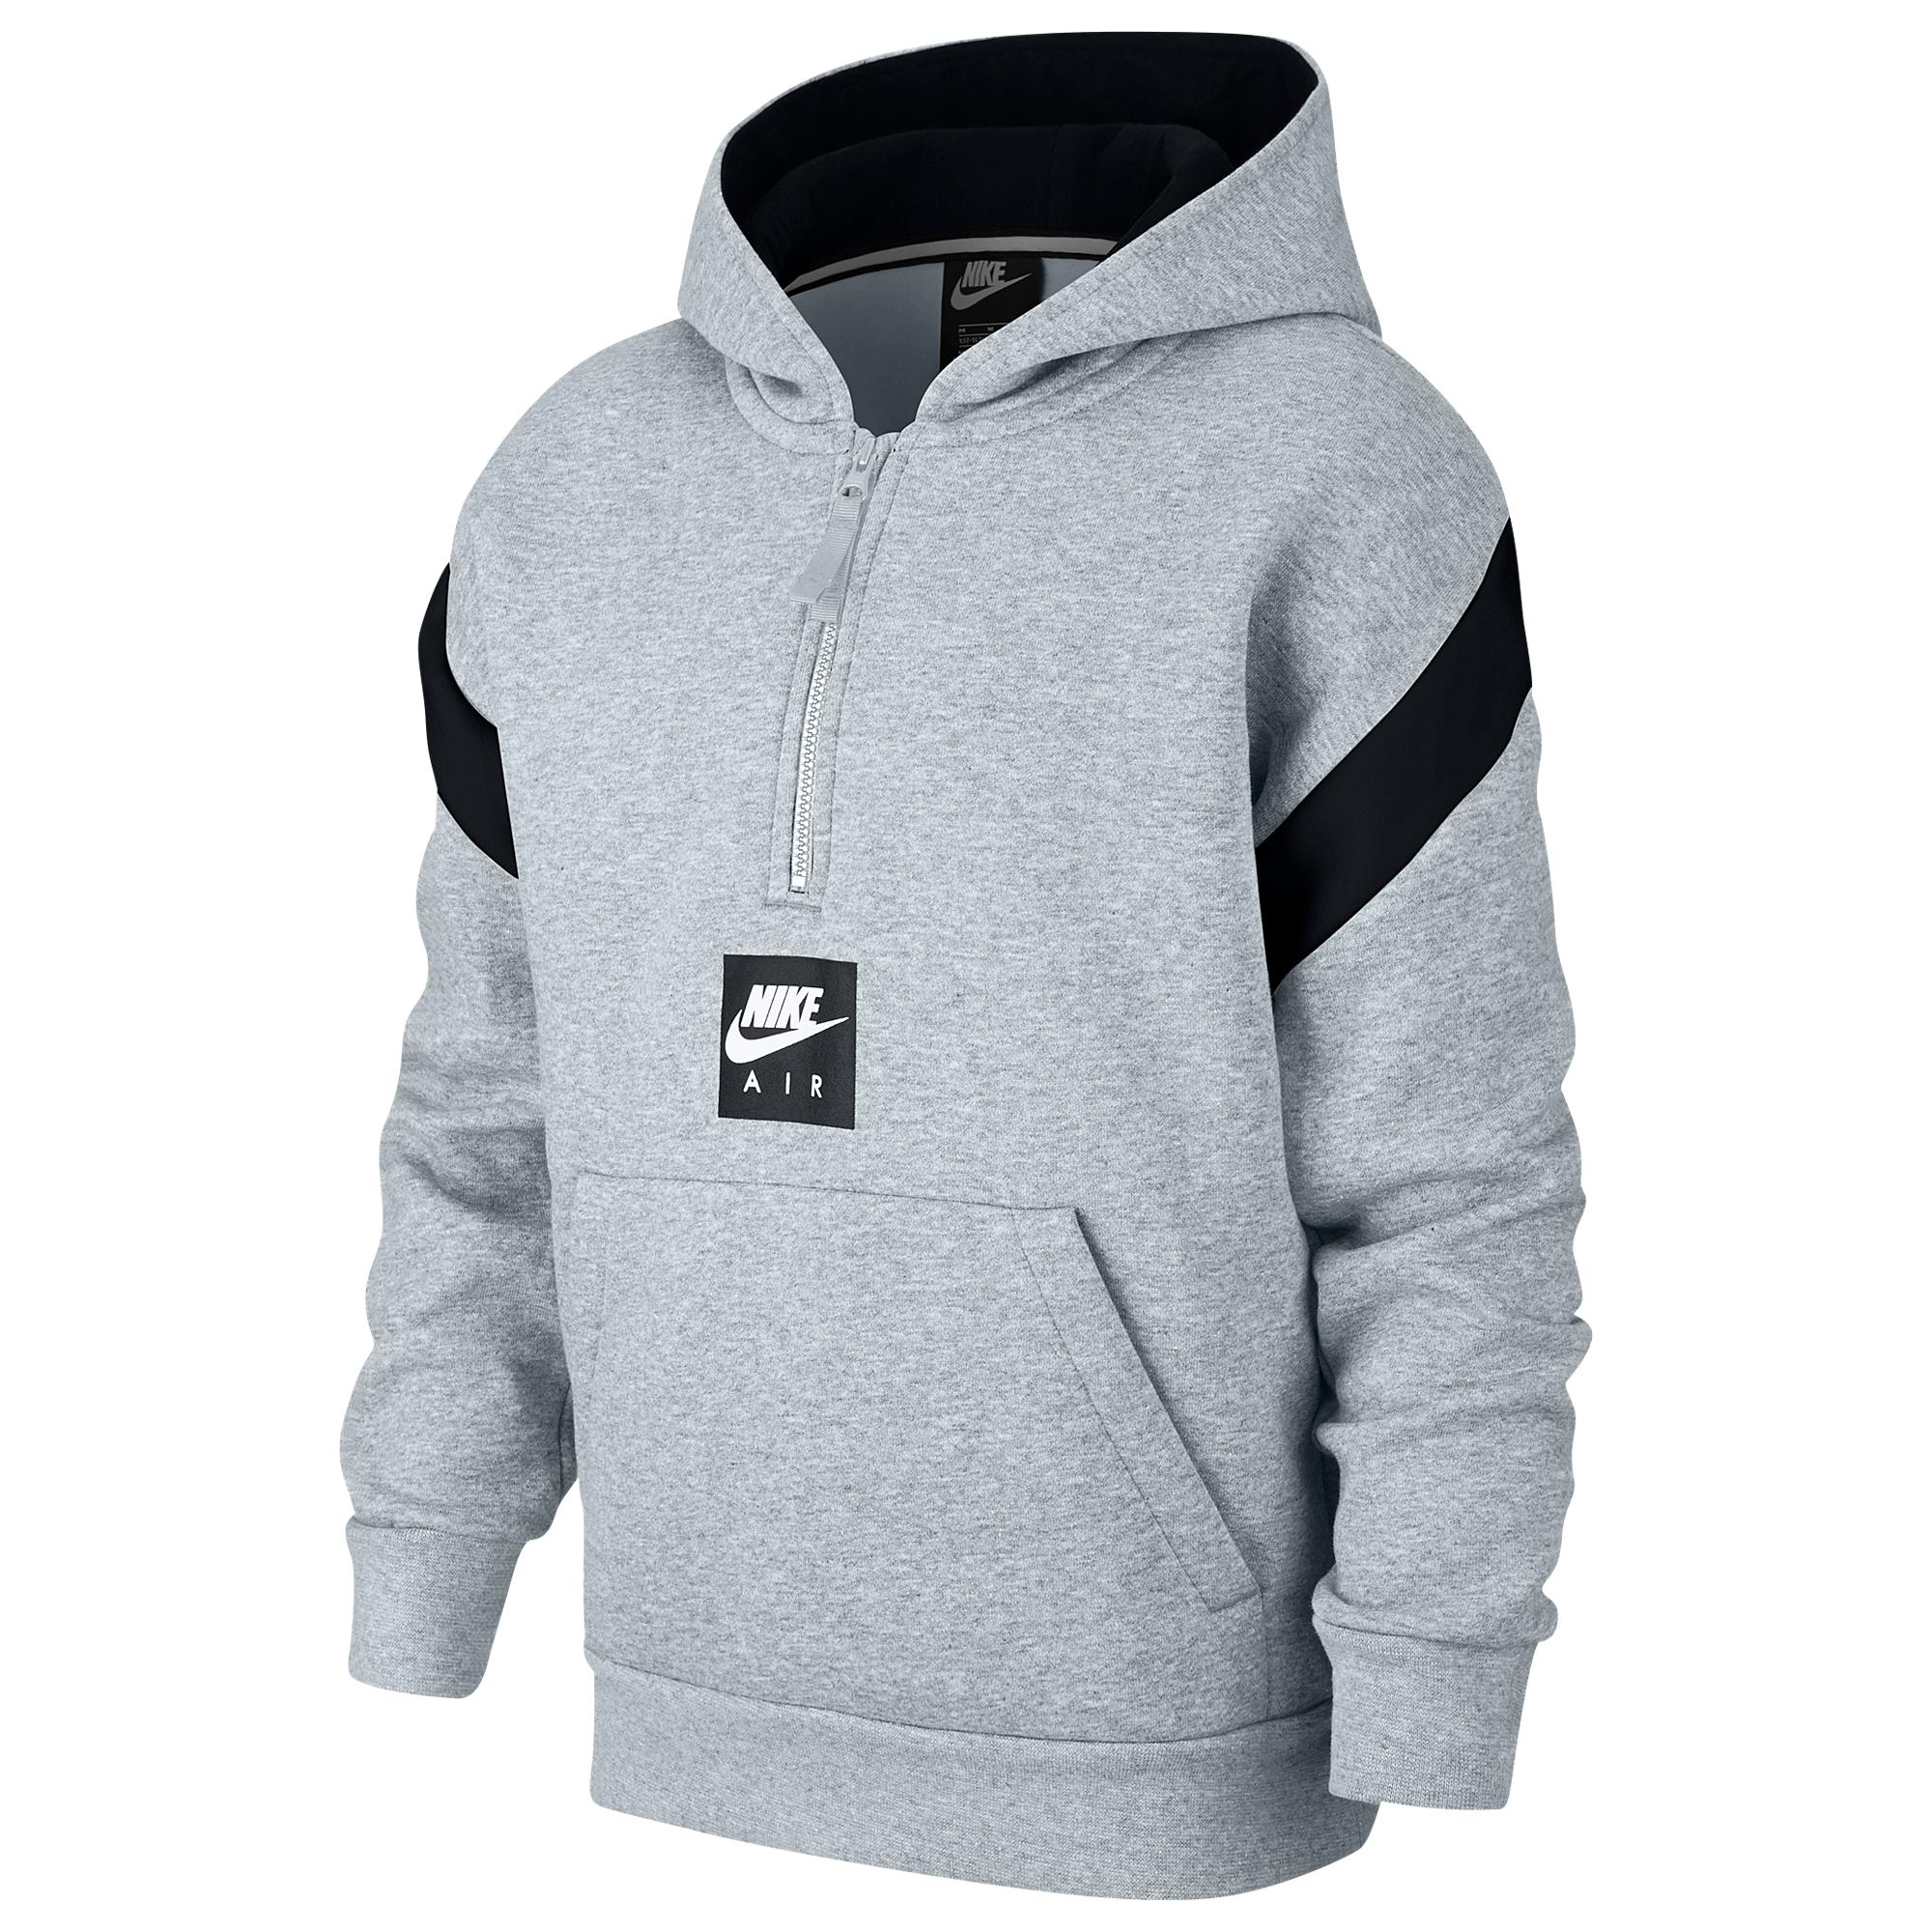 Nike Fleece Air Half-zip Pullover Hoodie in Gray for Men - Lyst